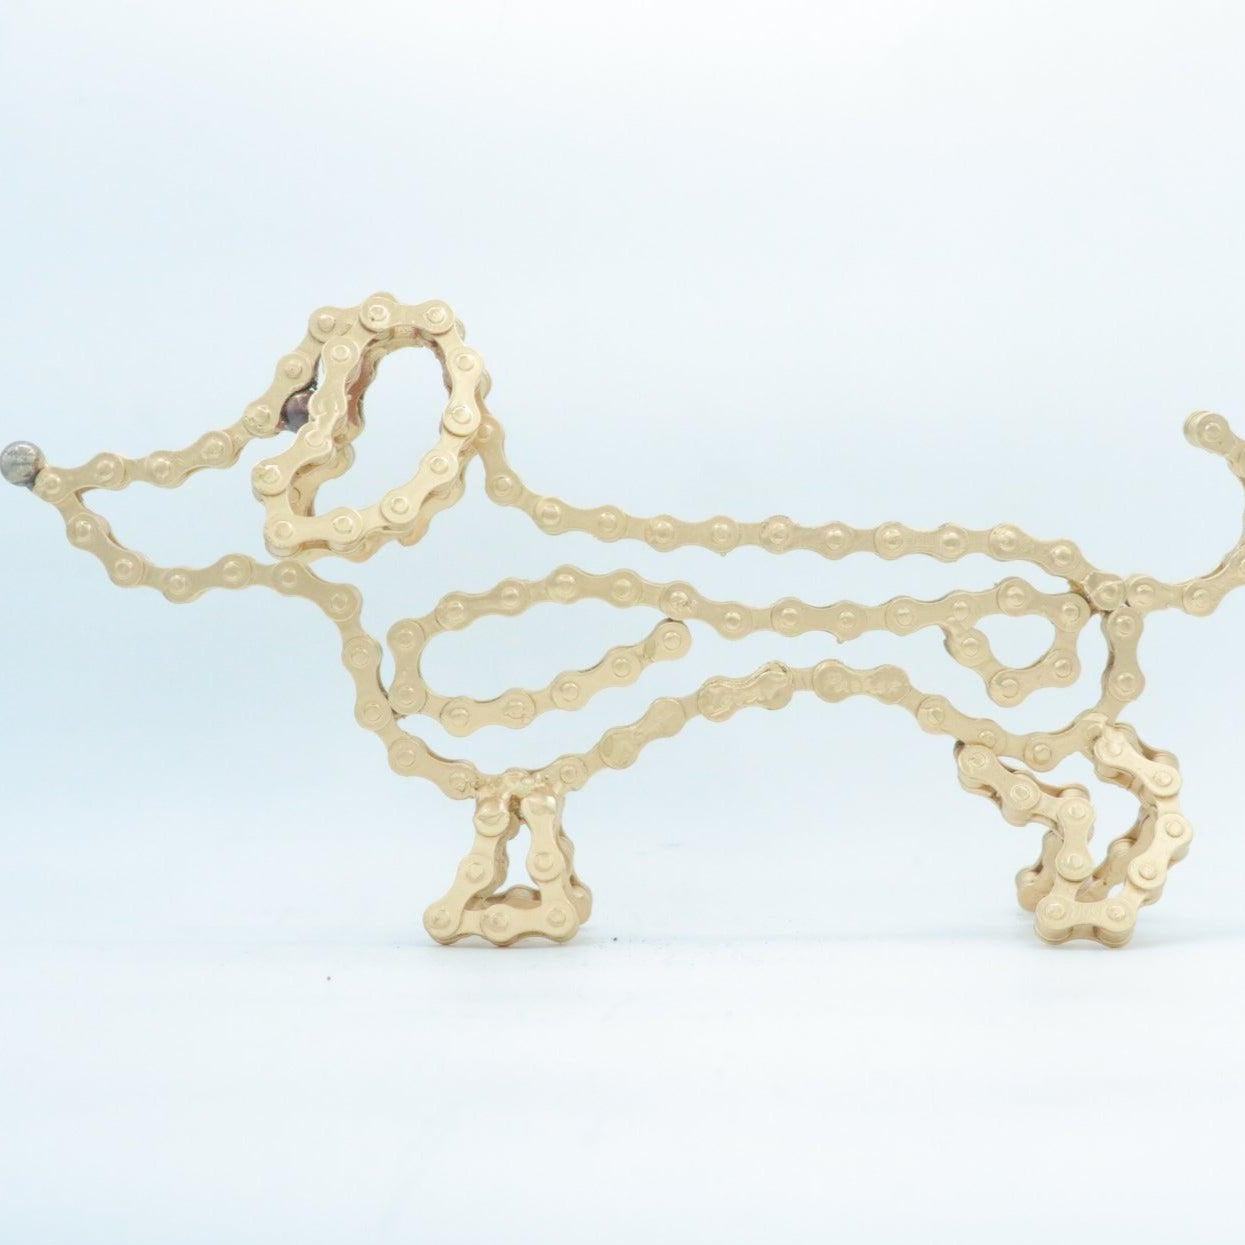 Dachshund Sculpture (Hot Dog) | UNCHAINED by NIRIT LEVAV PACKER